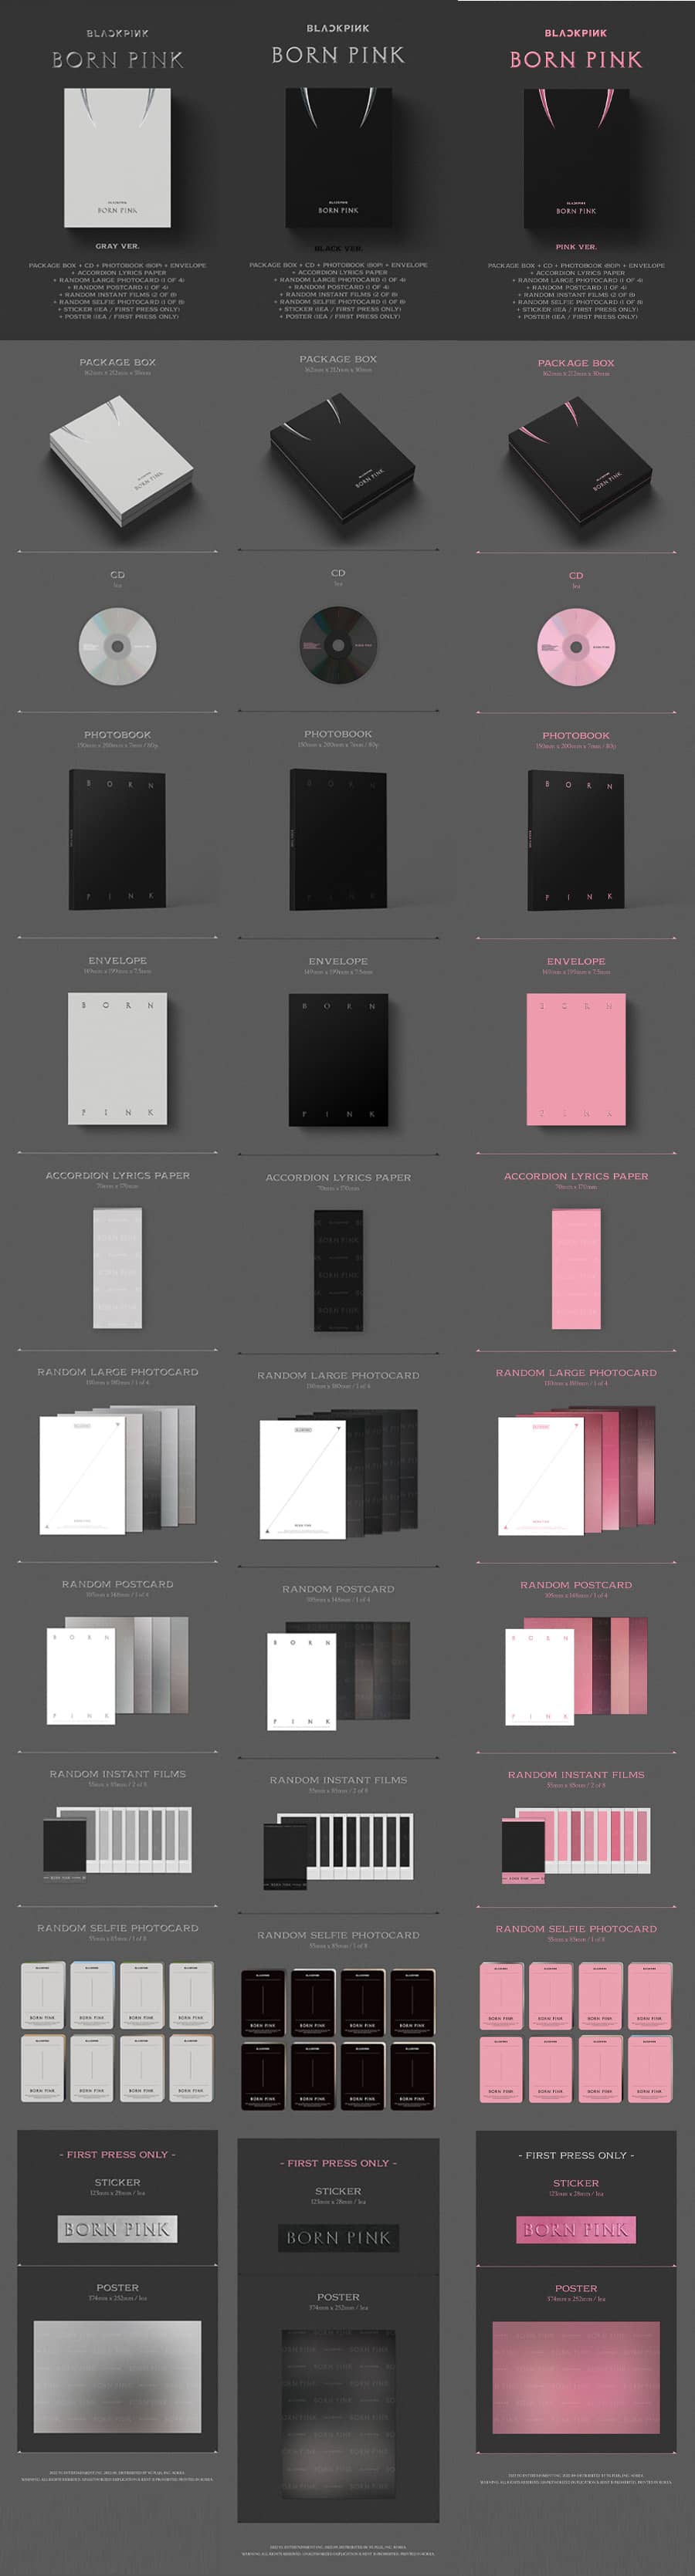 blackpink-2nd-album-born-pink-box-set-ver-wholesale